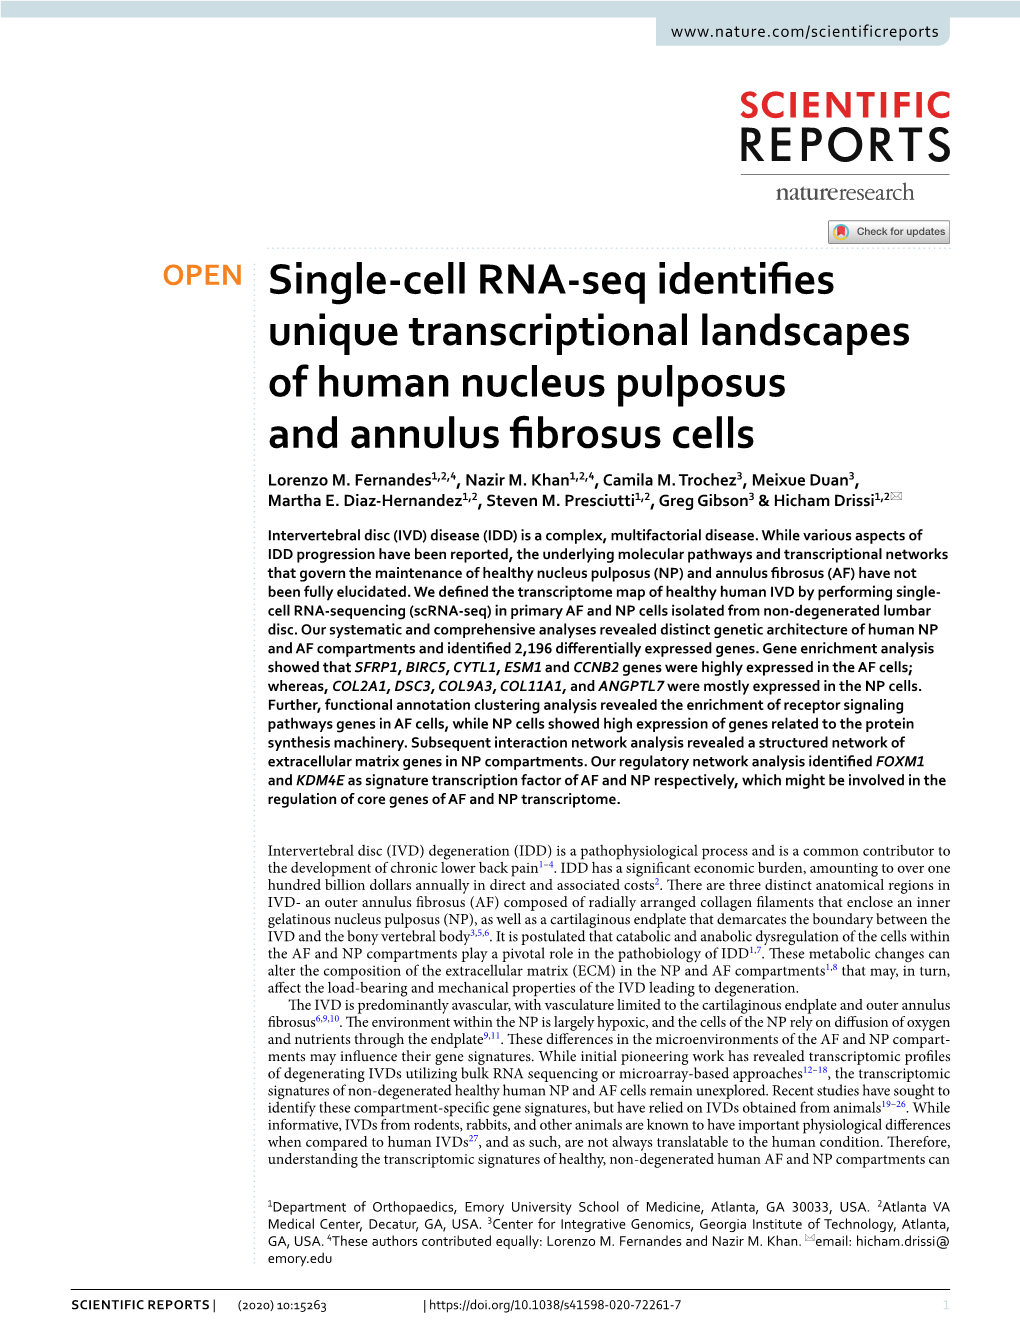 Single-Cell RNA-Seq Identifies Unique Transcriptional Landscapes Of